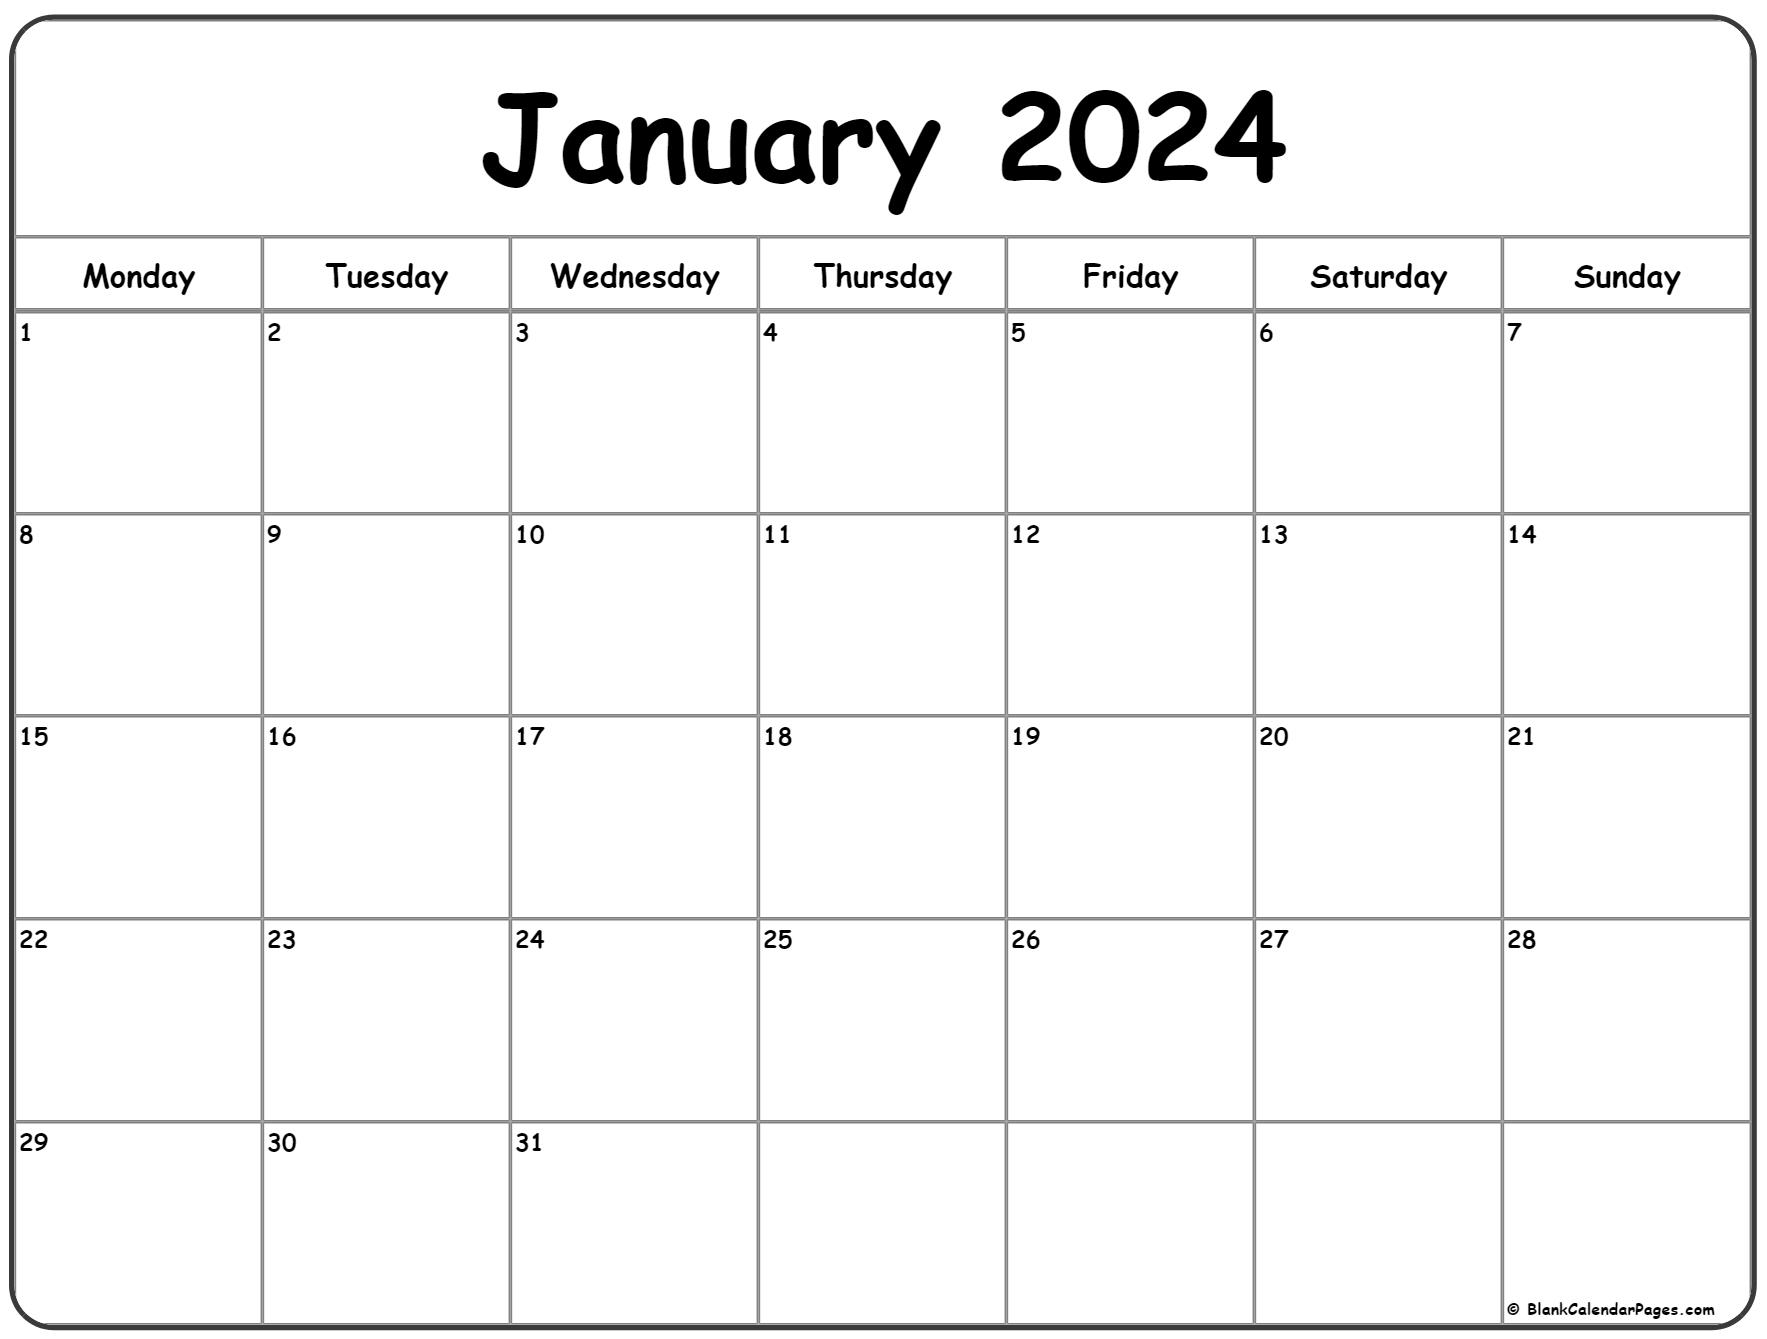 January 2024 Monday Calendar | Monday To Sunday for Blank January 2024 Calendar Printable